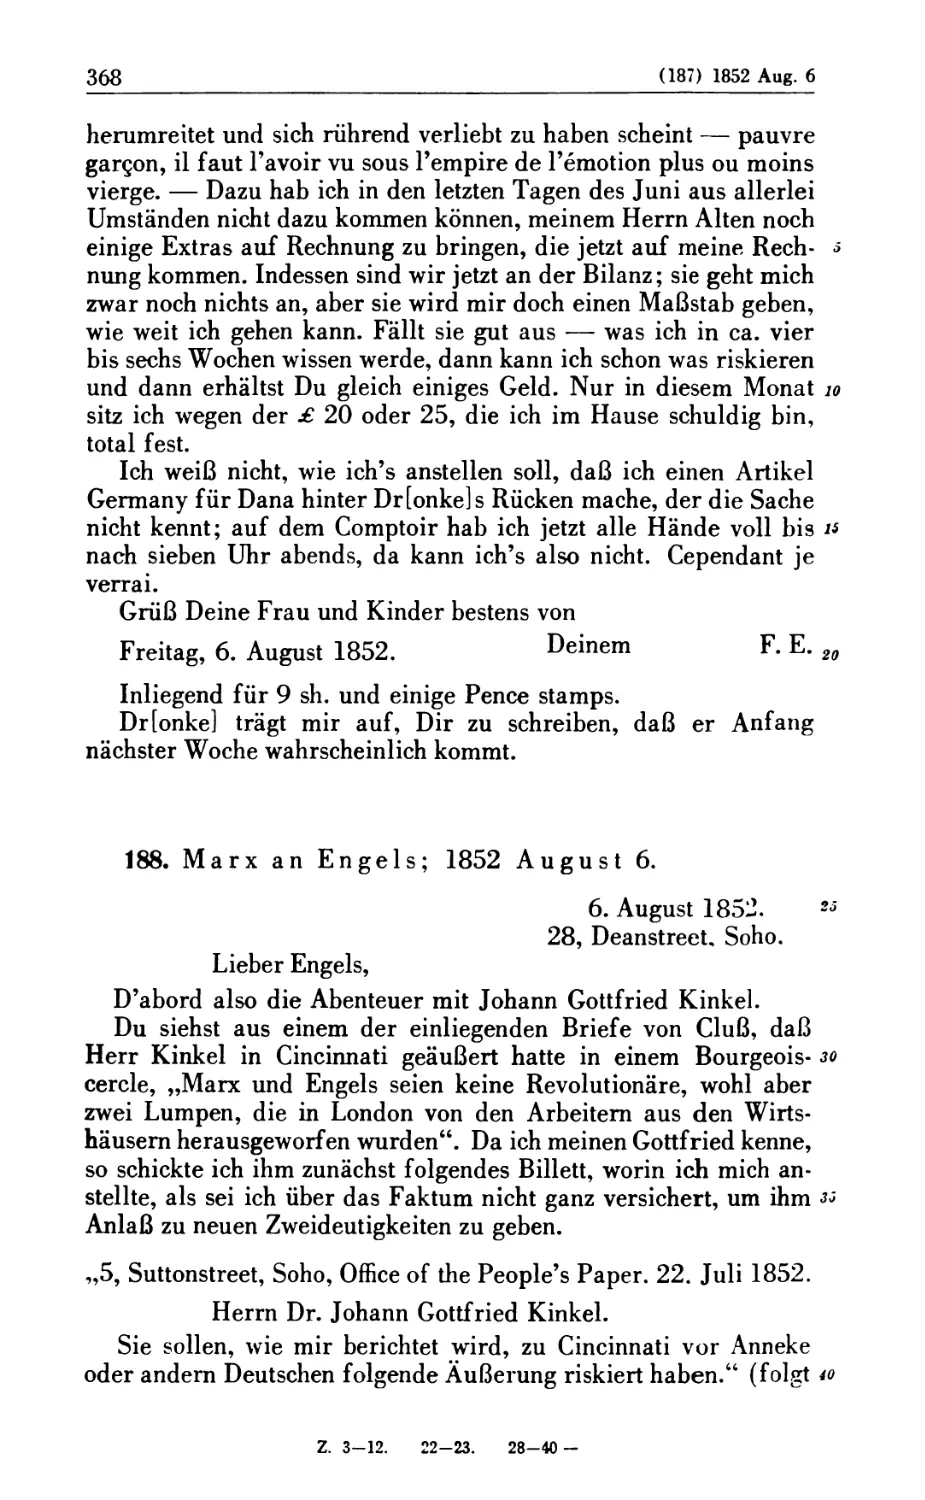 188. Marx an Engels; 1852 August 6